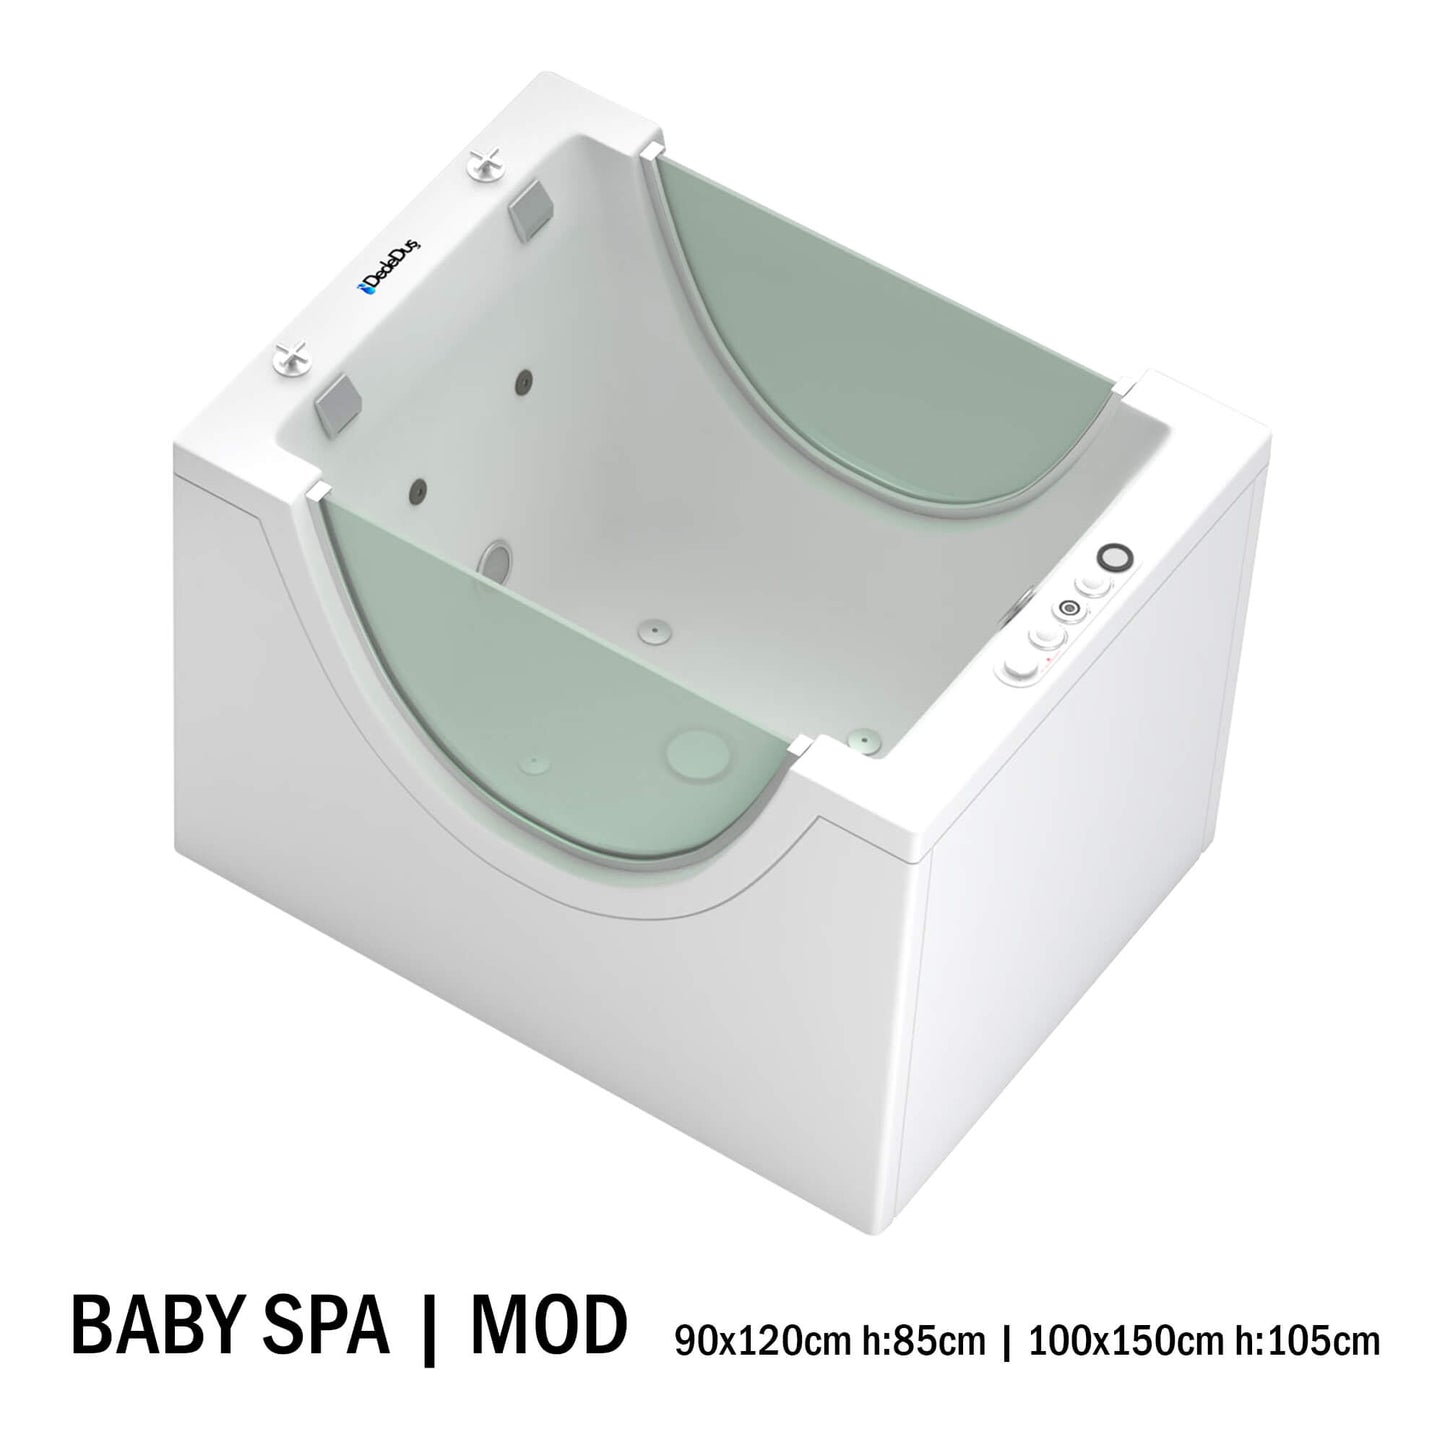 Baby SPA, Shower